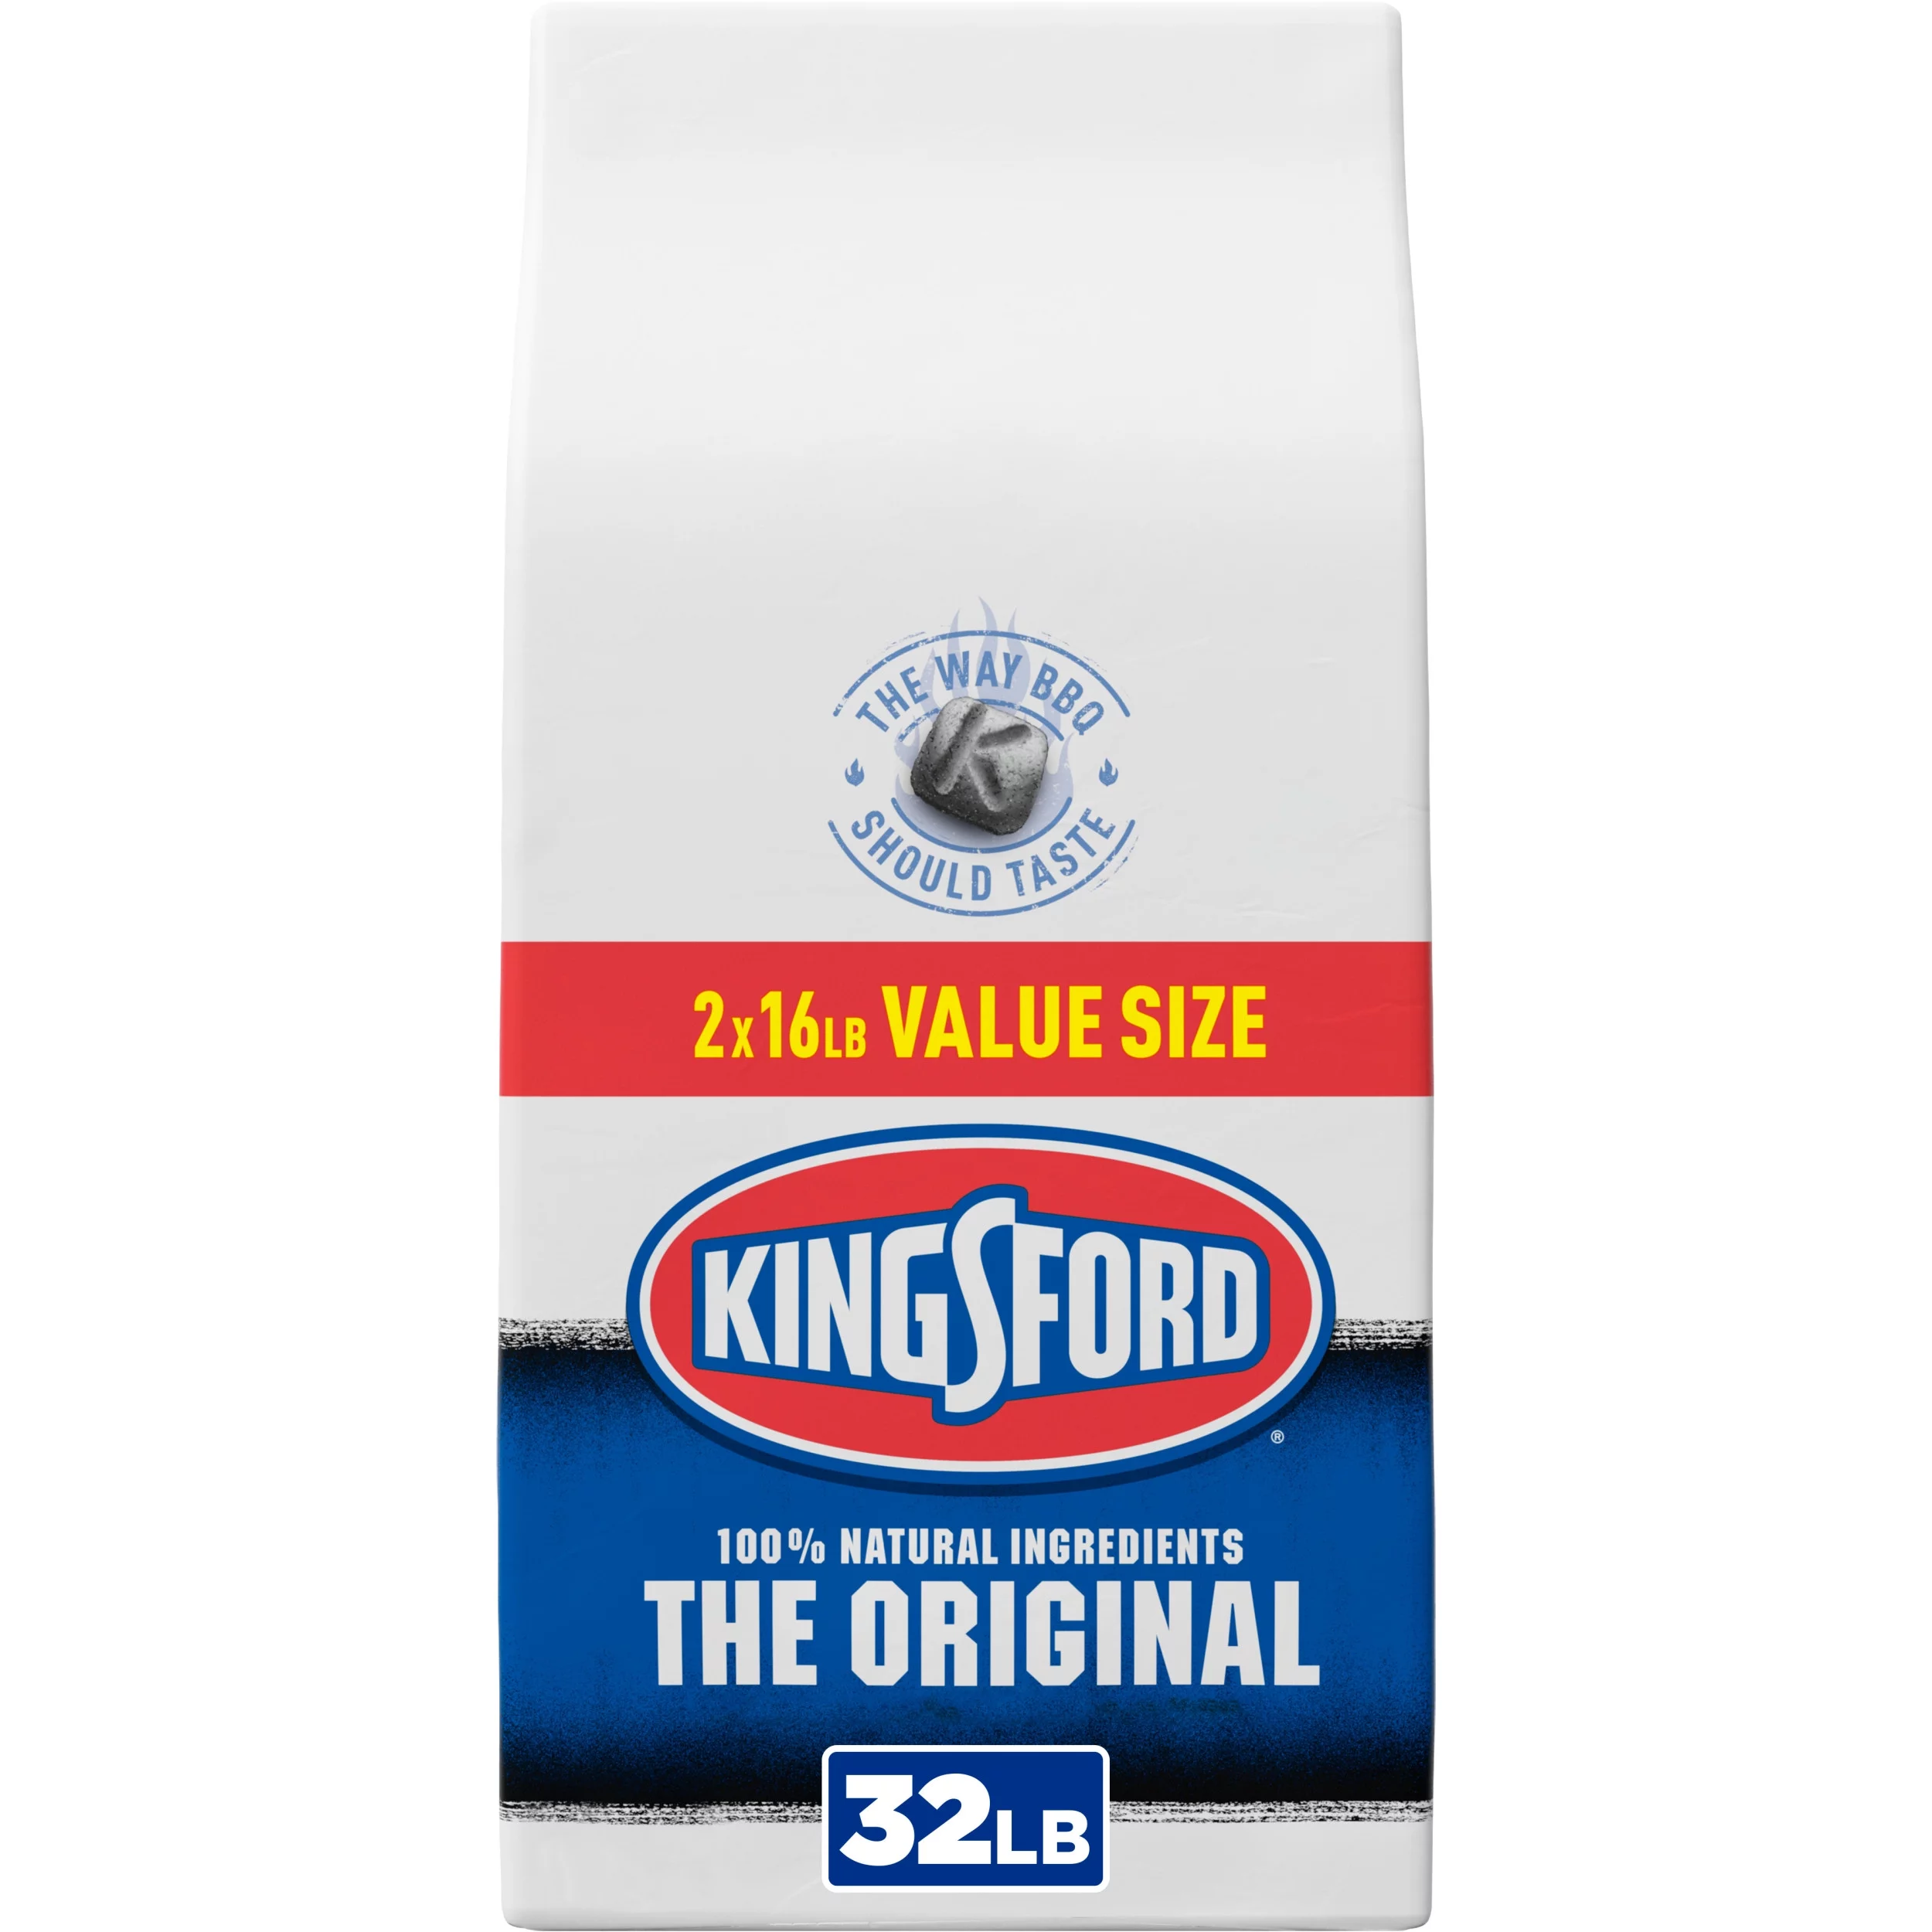 Kingsford Original Charcoal Briquettes, 16 lbs, 2 Pack